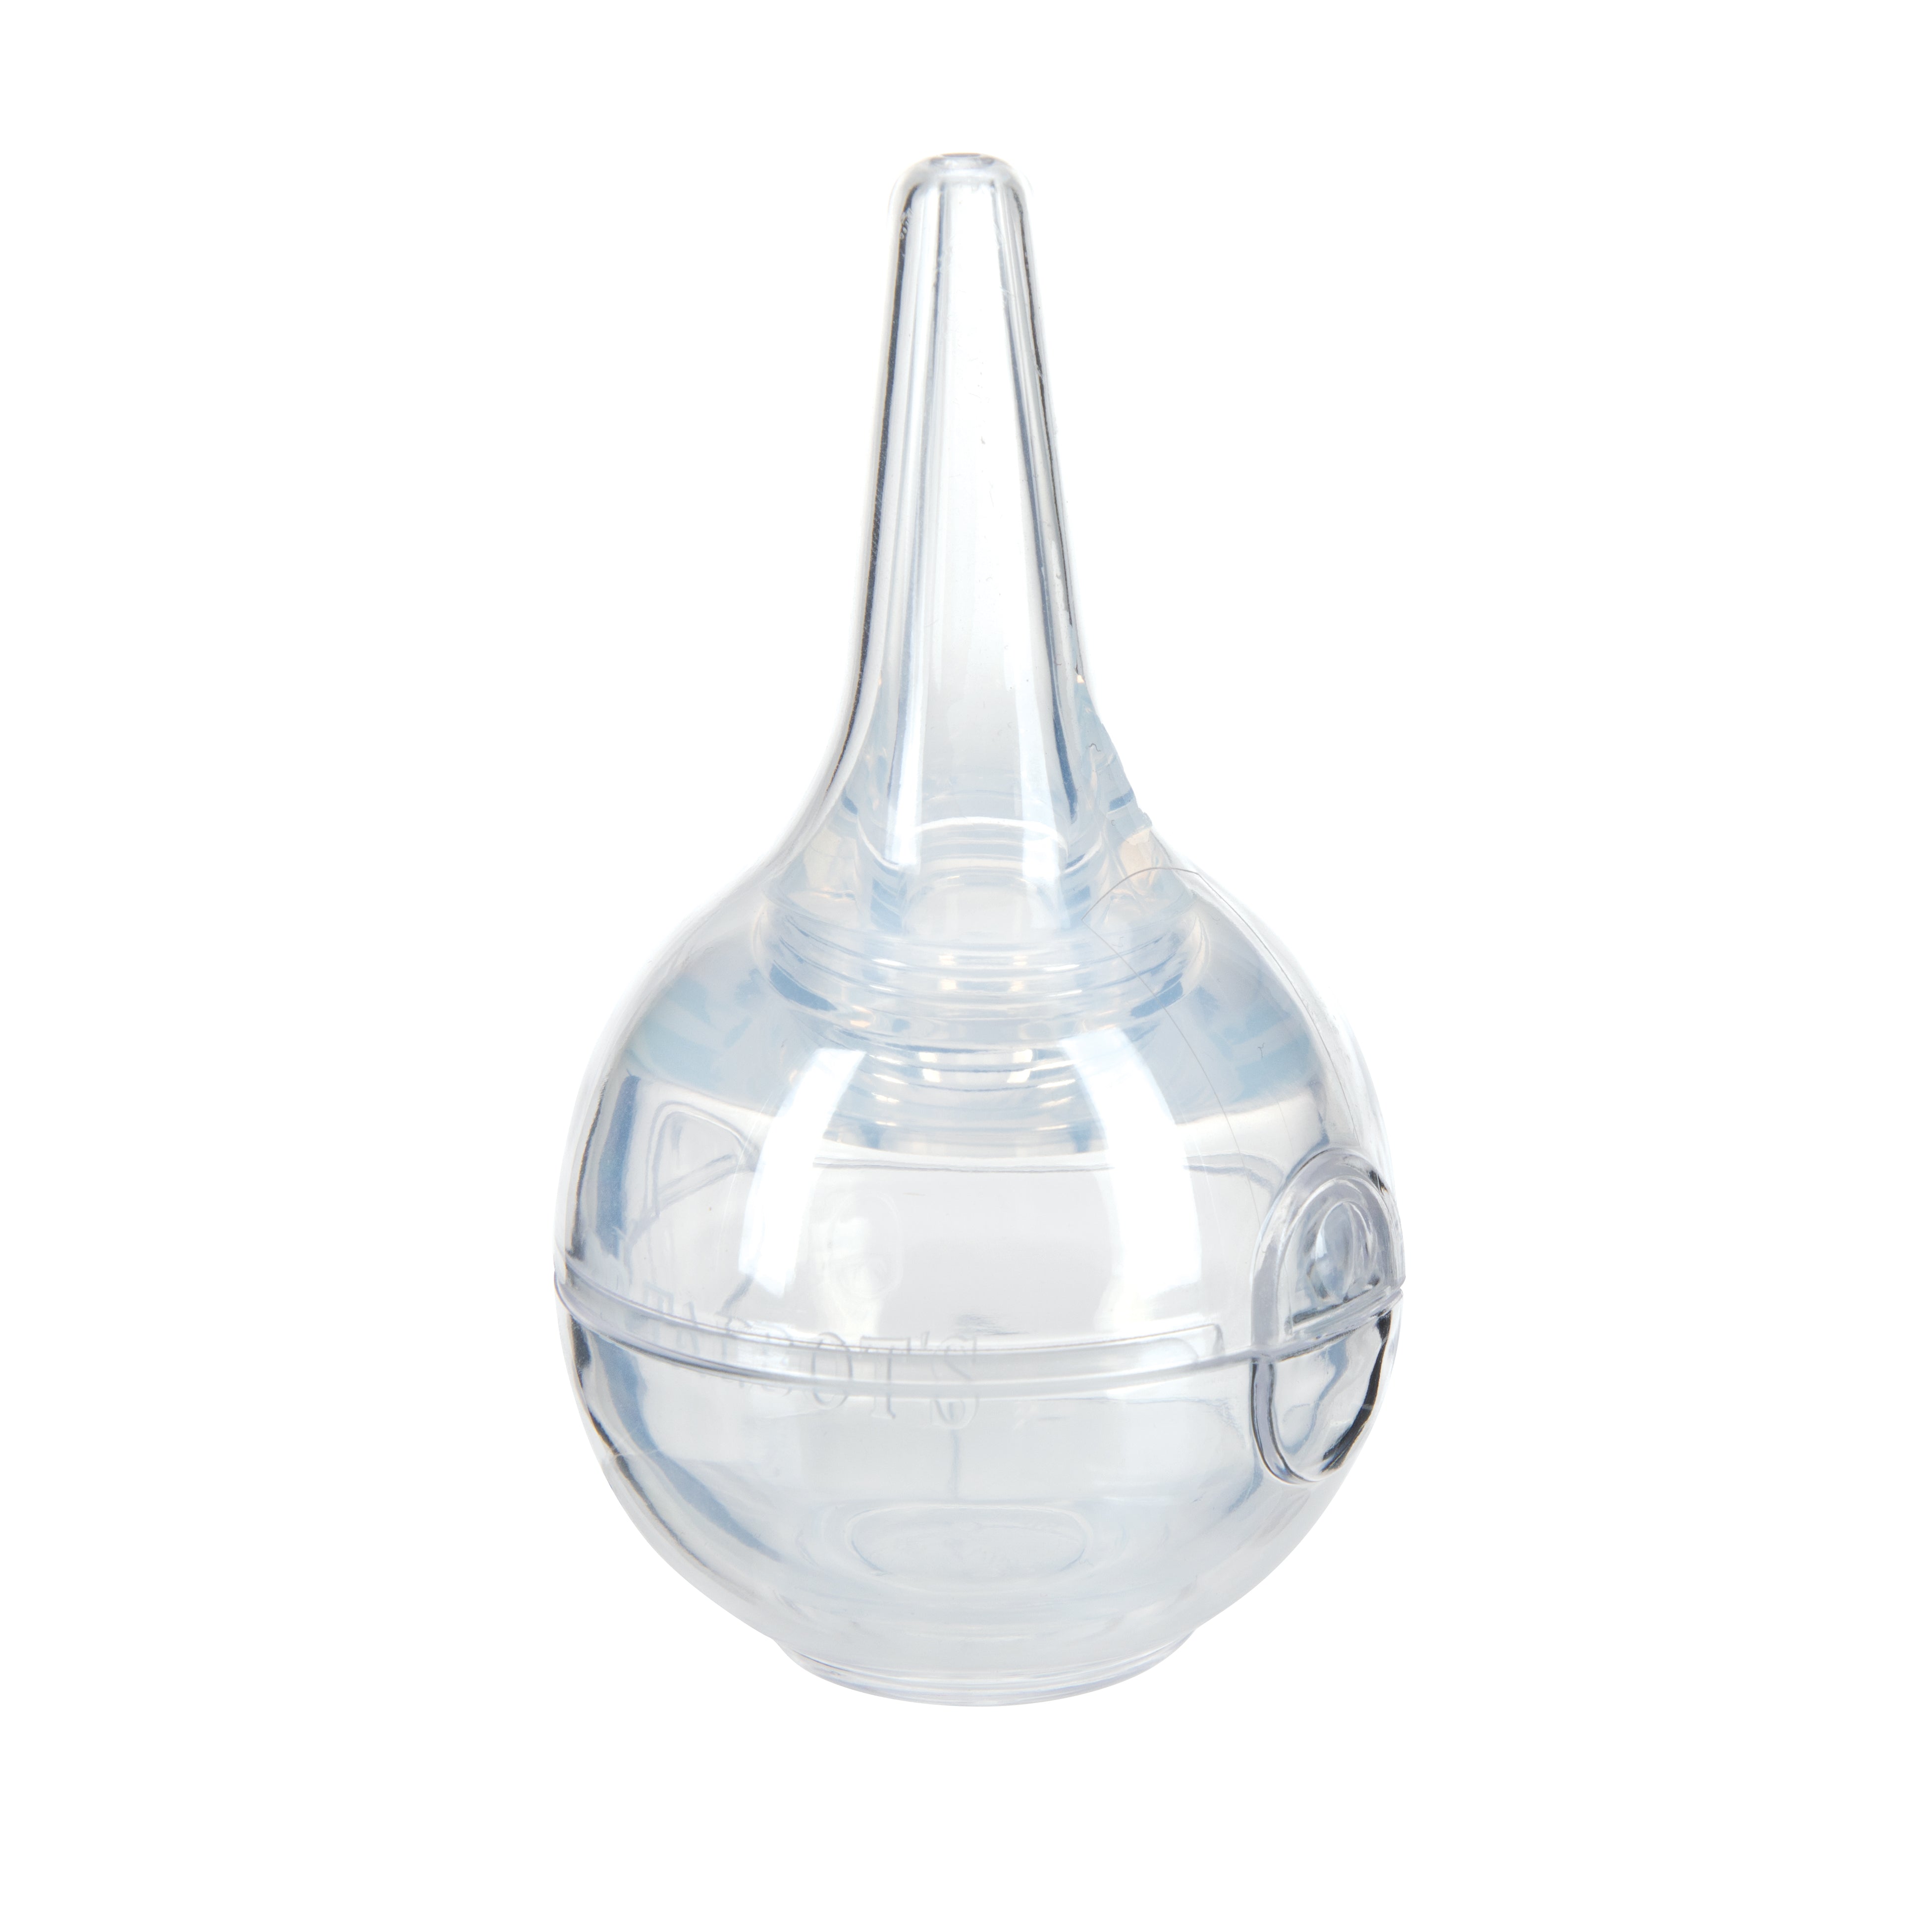 Nosefrida Nasal Aspirator Replacement Hygiene Filters - 20 pack - (2 Packs)